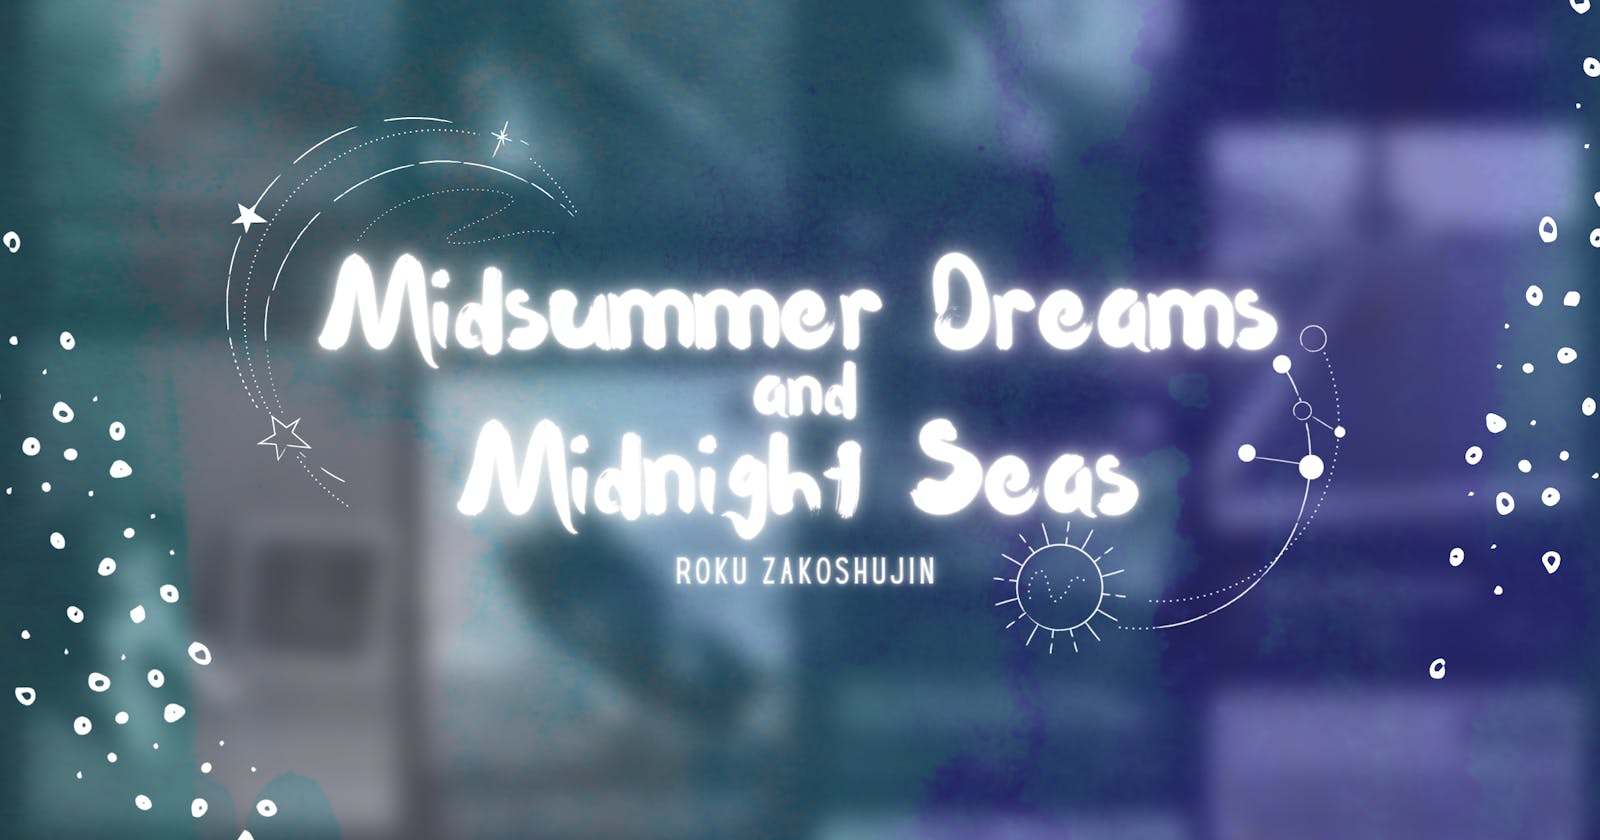 Midsummer Dreams and Midnight Seas by Zakoshujin